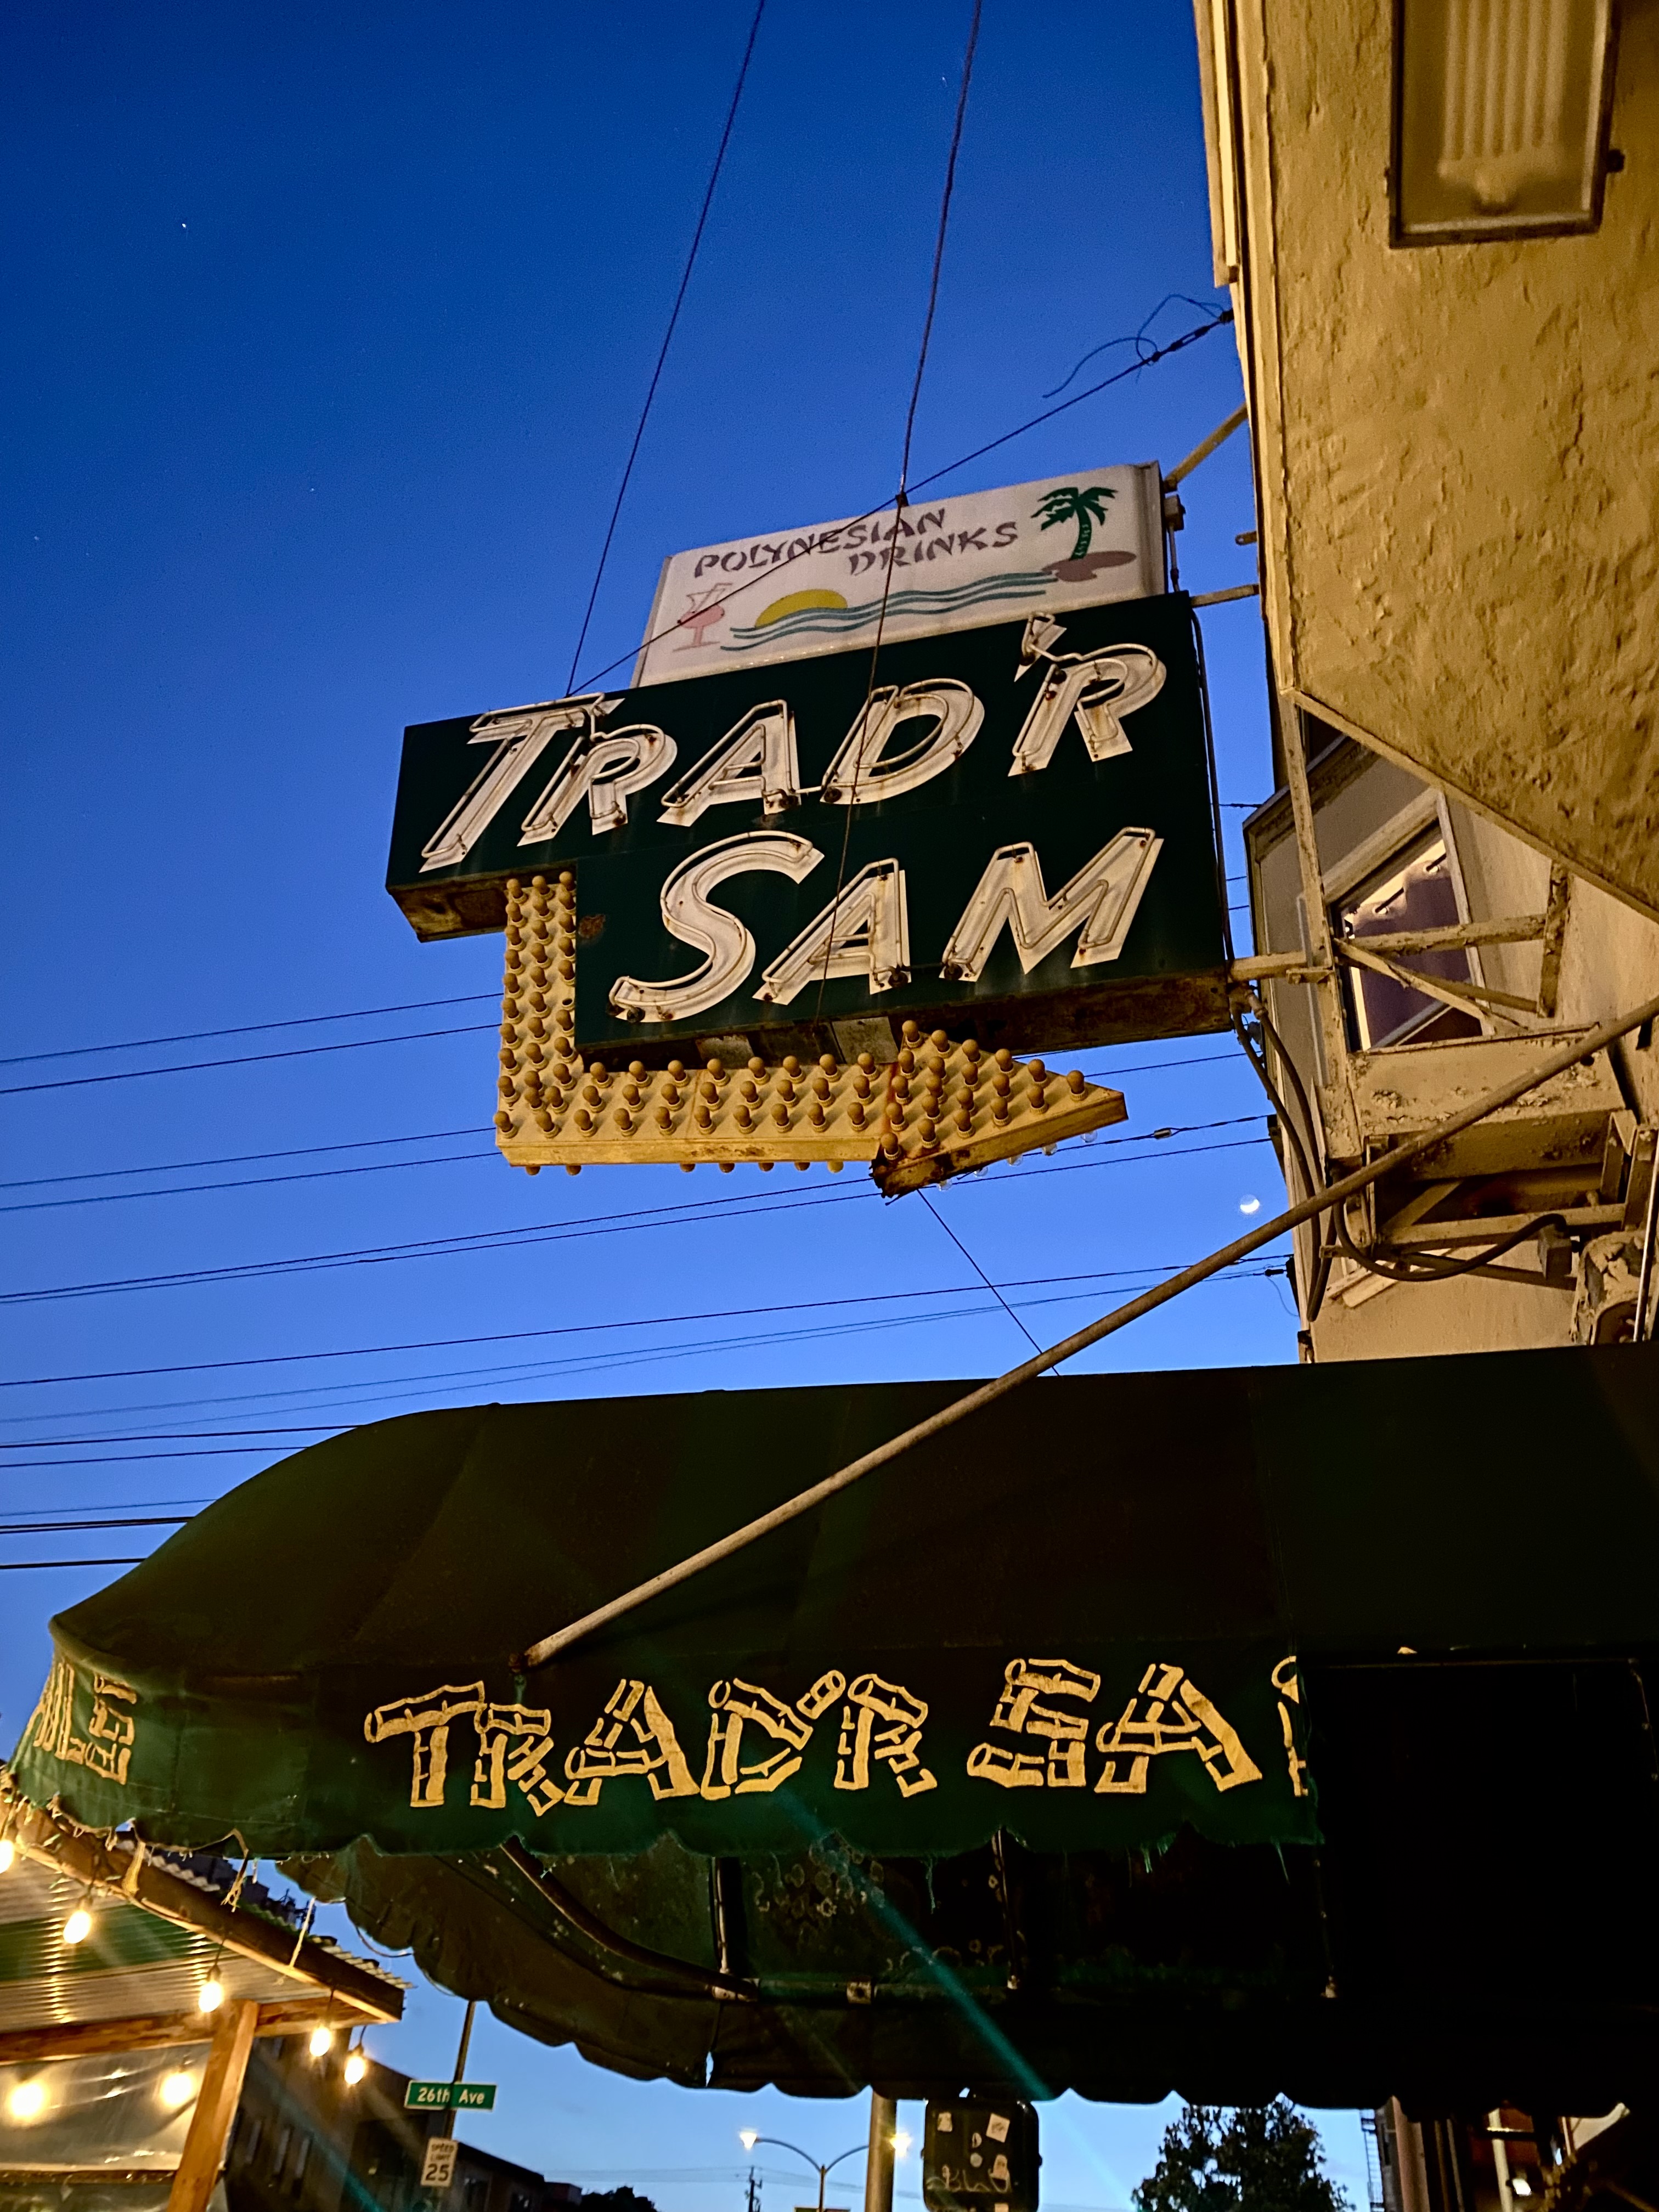 A sign that reads “Trad’r Sam.”